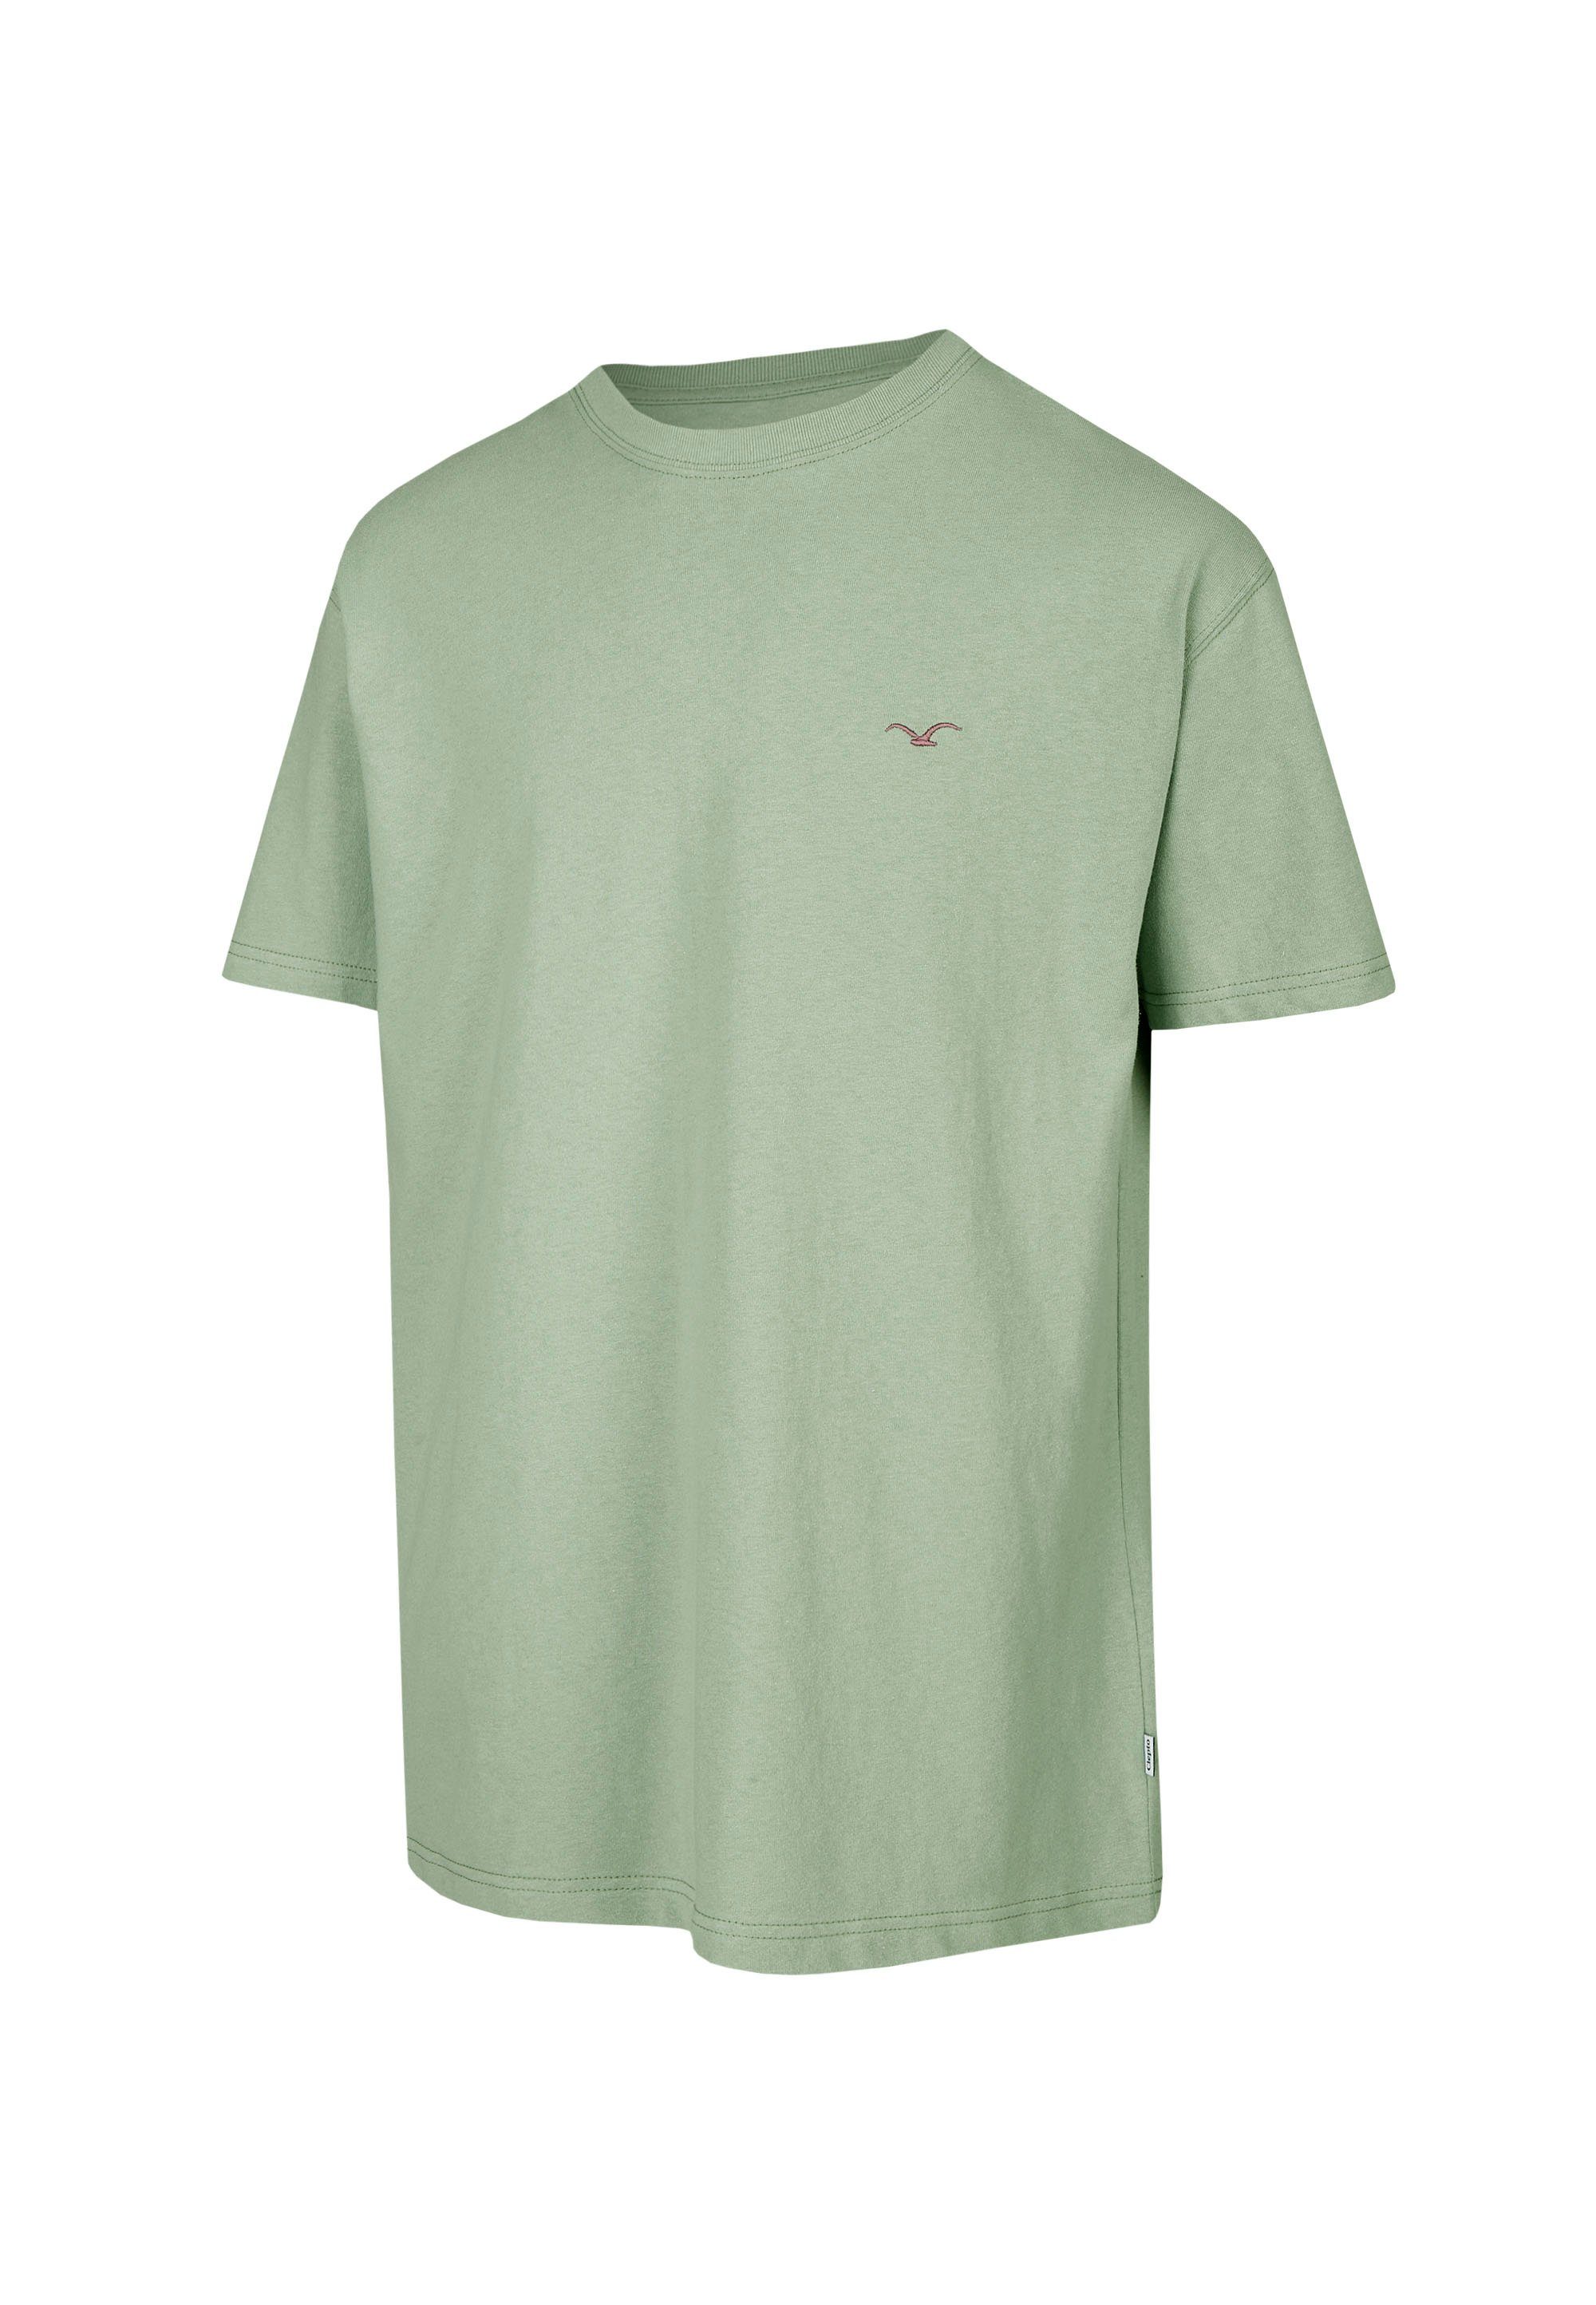 Cleptomanicx Boxy in 2 T-Shirt Ligull Design schlichtem hellgrün